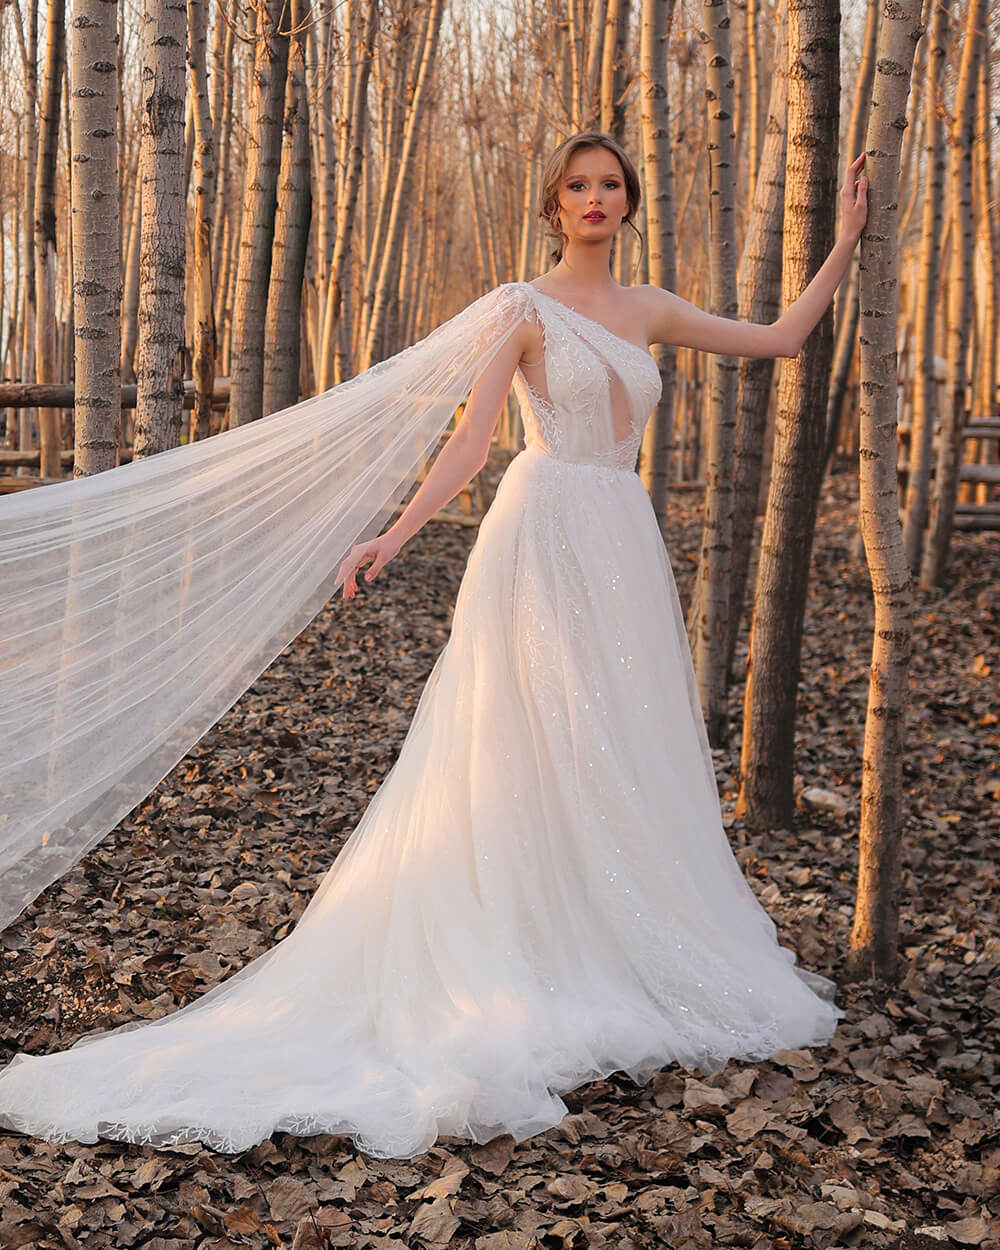 Wedding / Bridal Dress Hire - For Hire